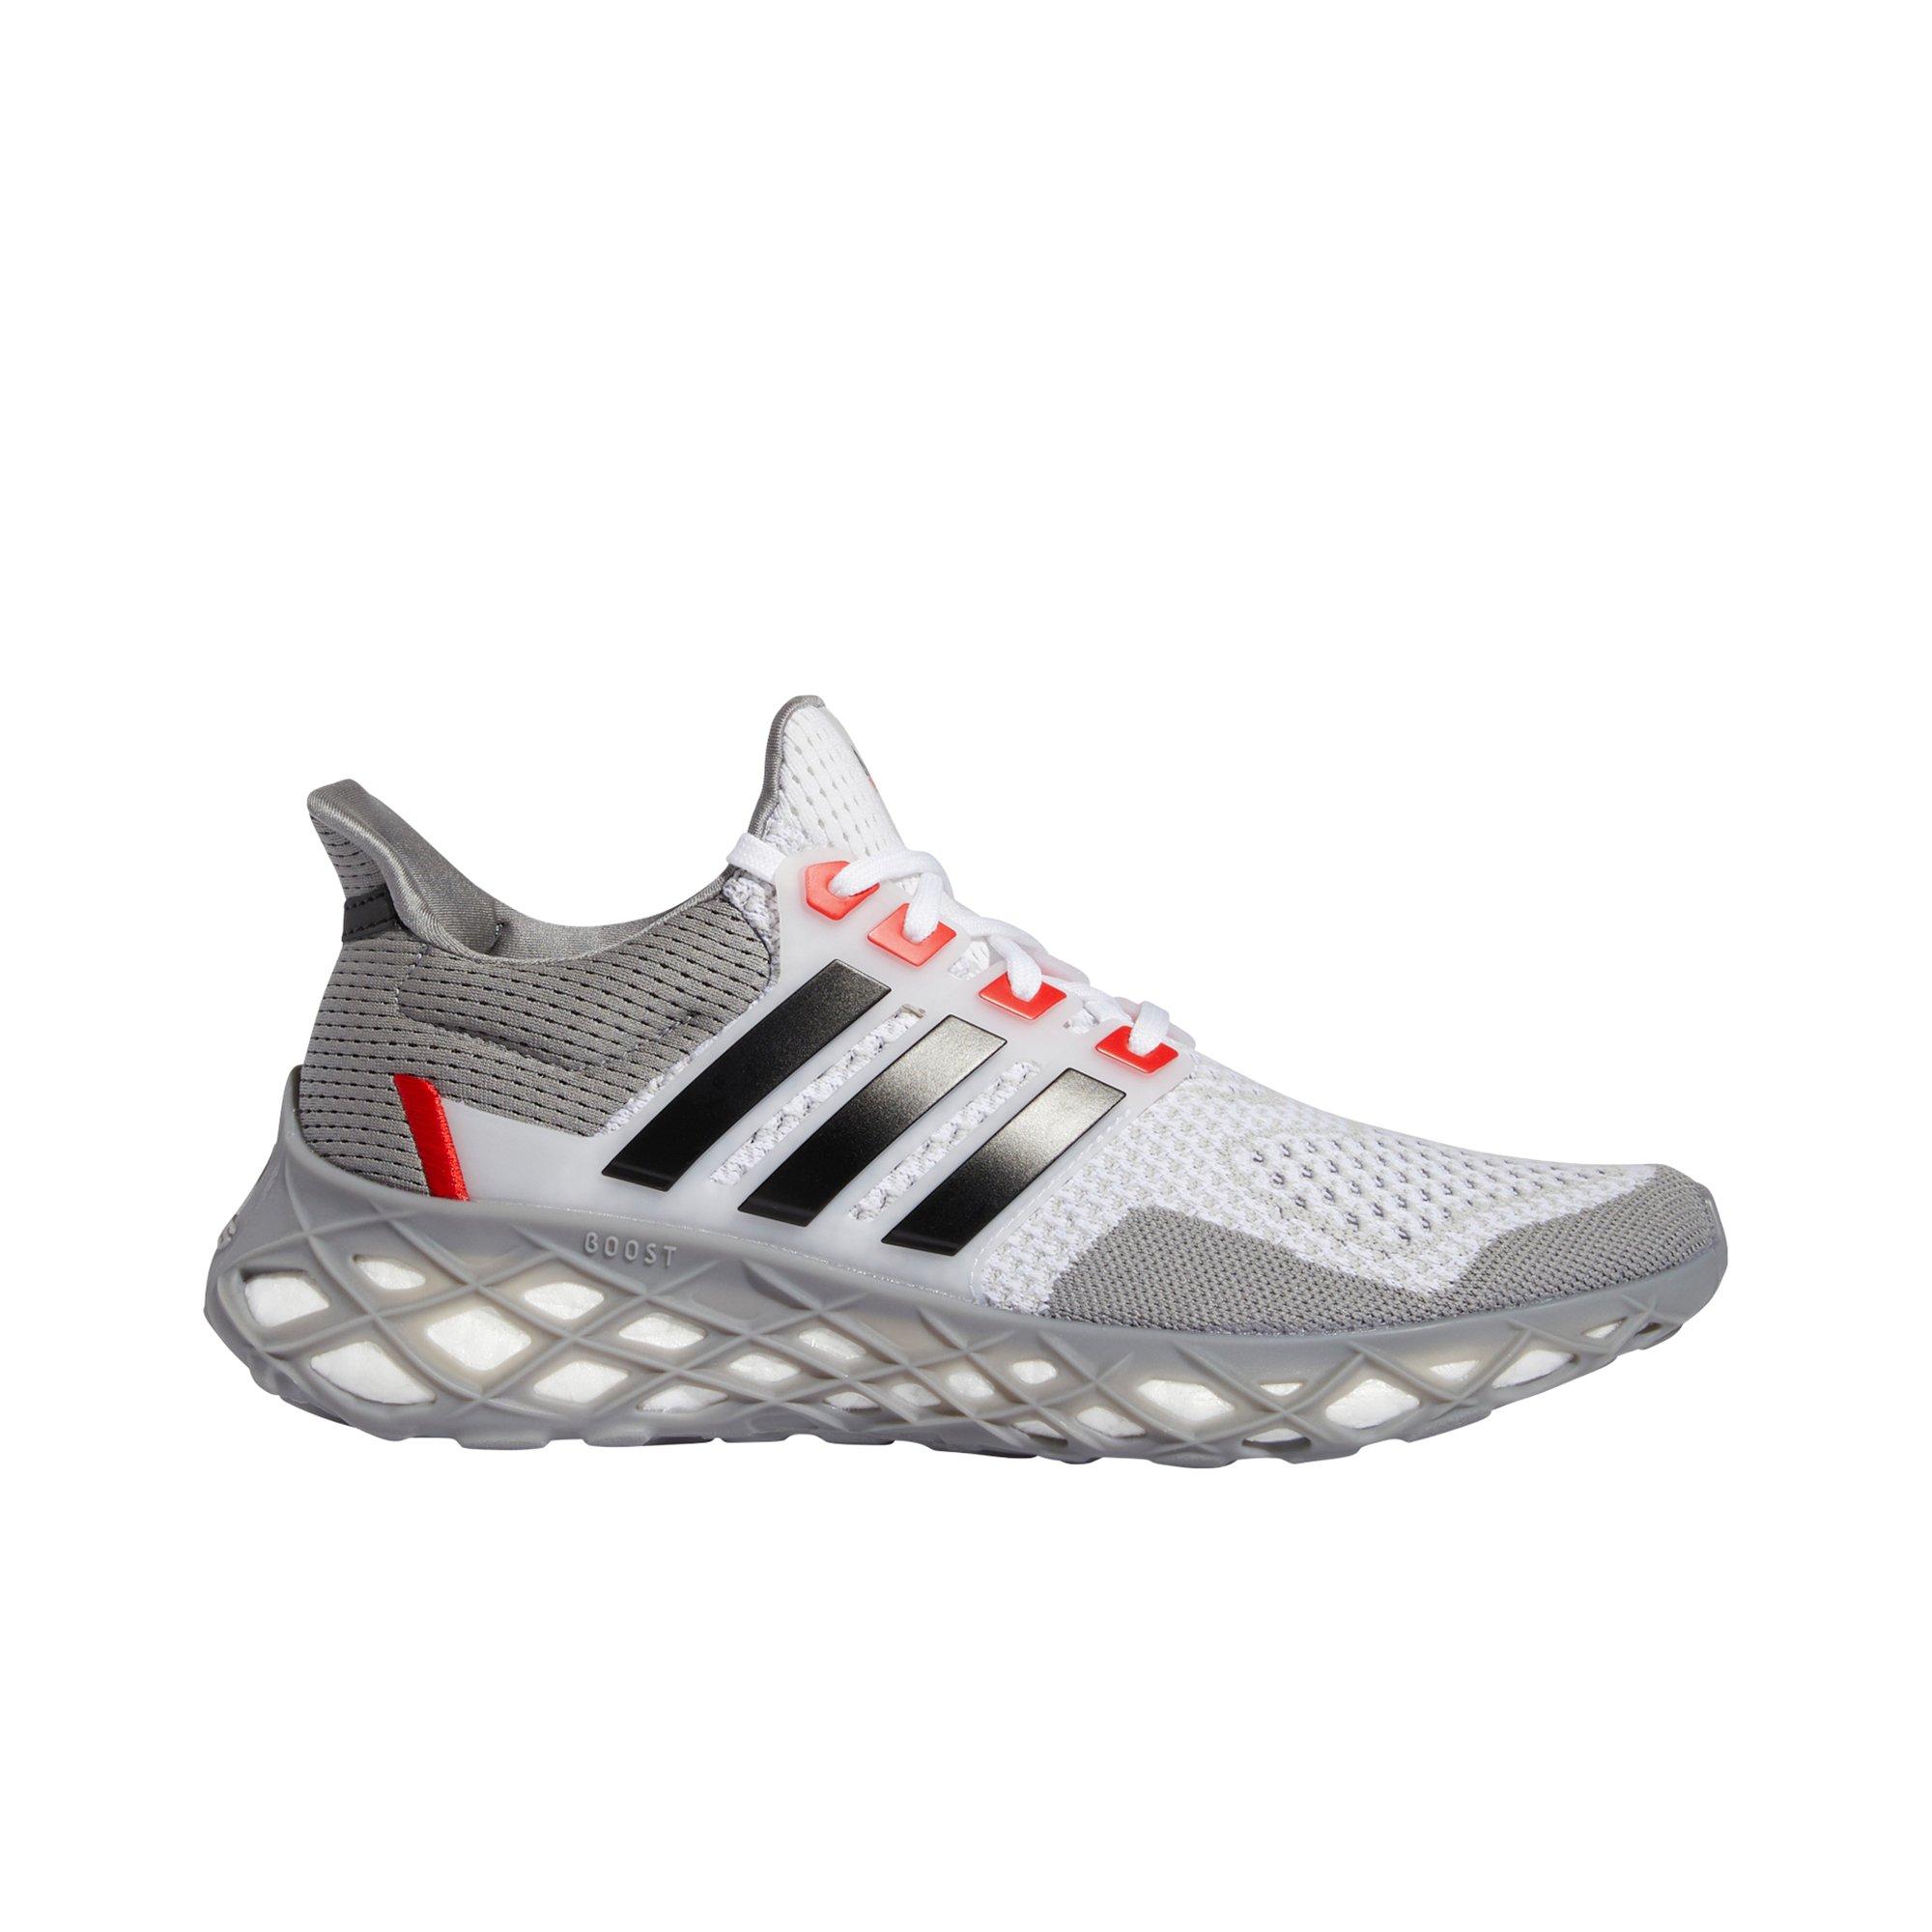 adidas Ultraboost Web "Grey One/Core Black" Red" Men's Running Shoe